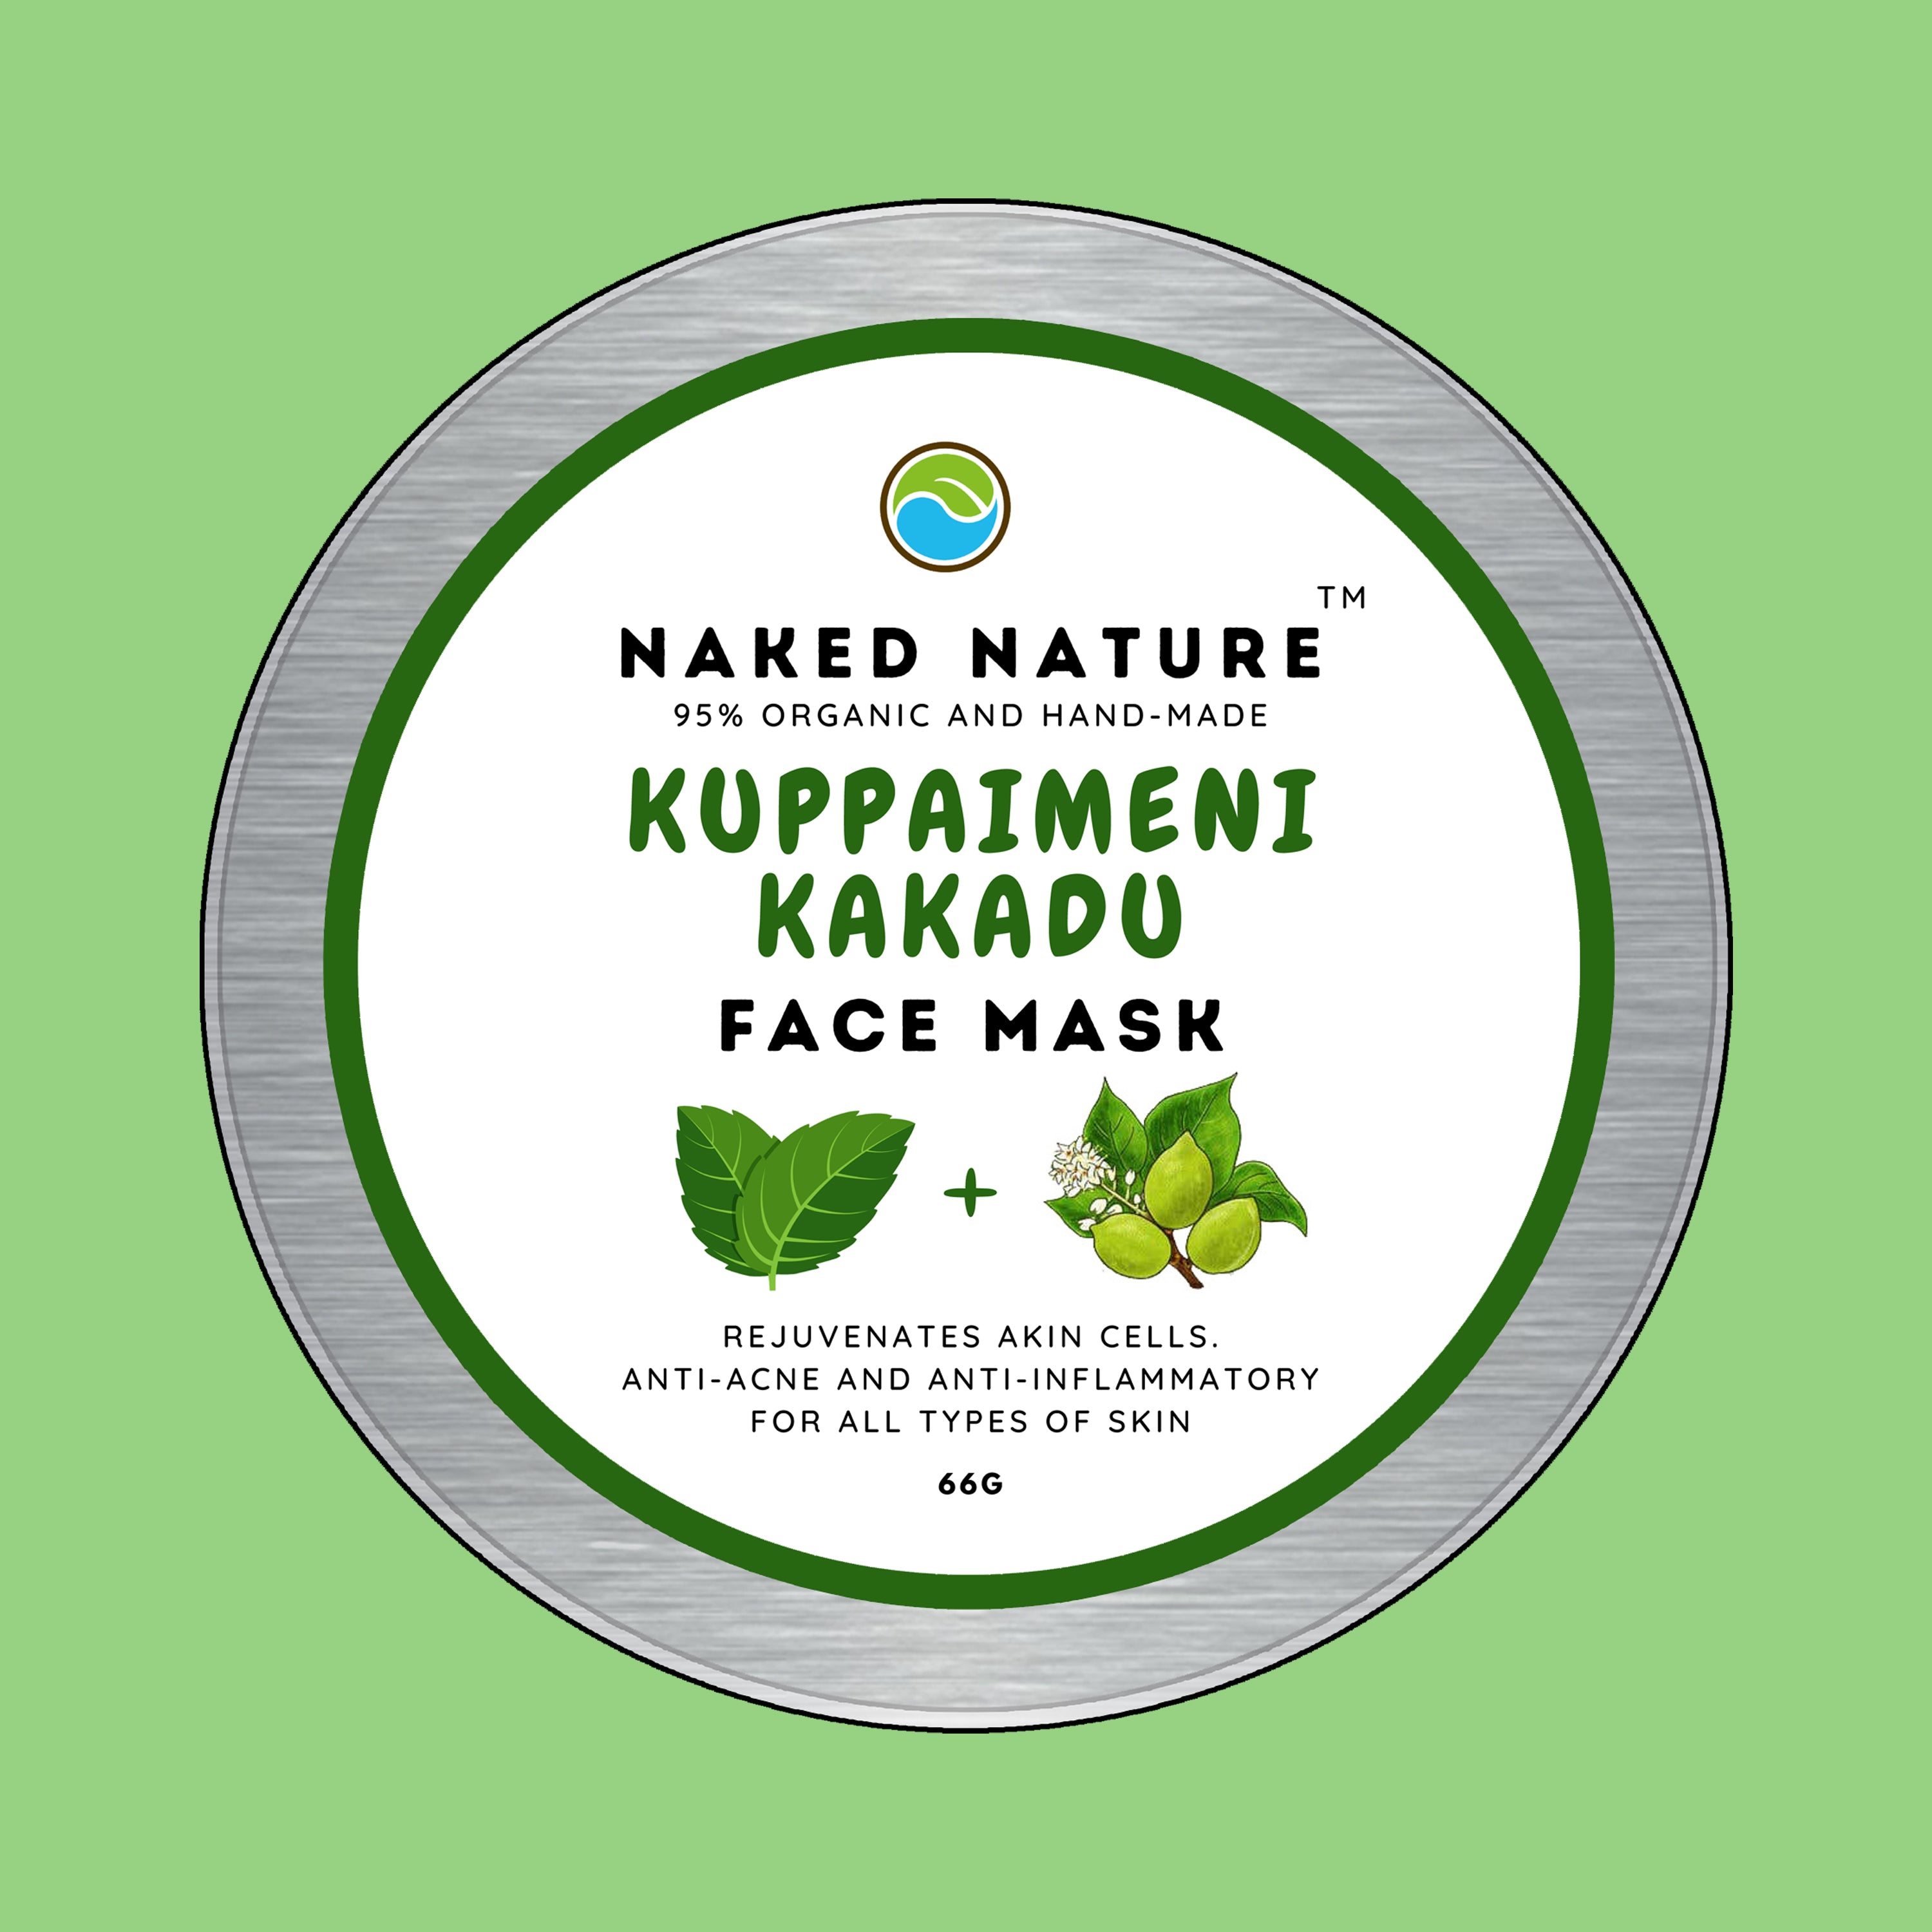 Kuppaimeni + kakadu Face Mask - Rich In Vitamin-C, Rejuvenates Skin Cells, Anti-Acne and Anti-Inflammation.